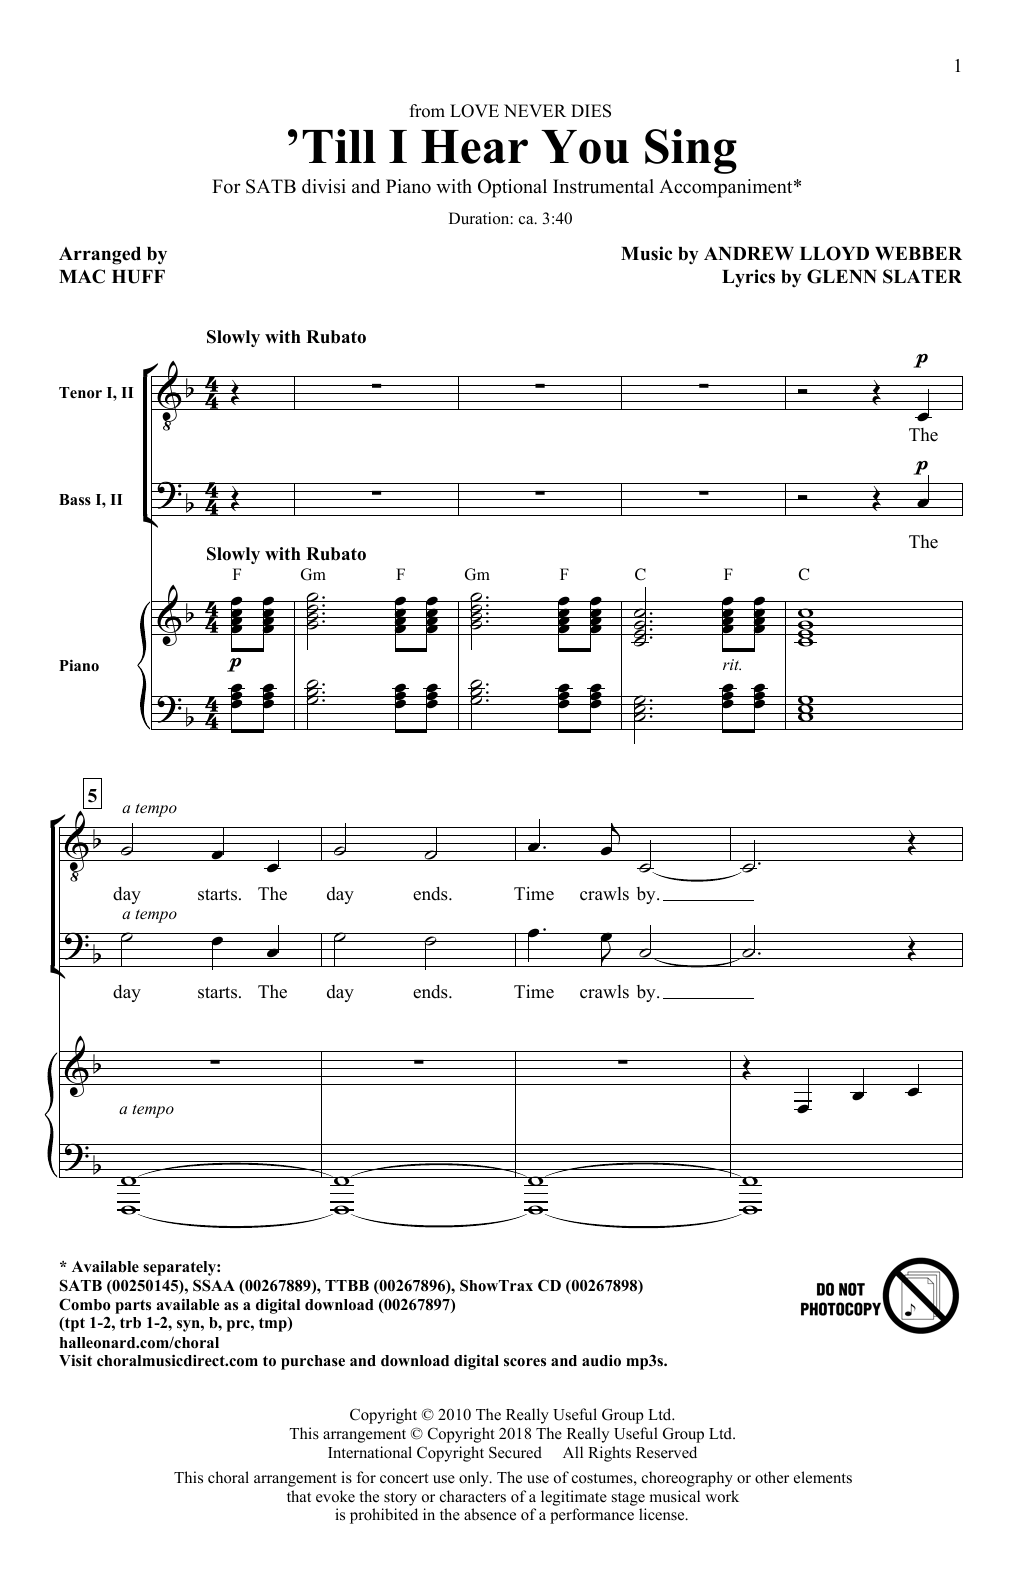 Andrew Lloyd Webber 'Til I Hear You Sing (arr. Mac Huff) Sheet Music Notes & Chords for SATB Choir - Download or Print PDF